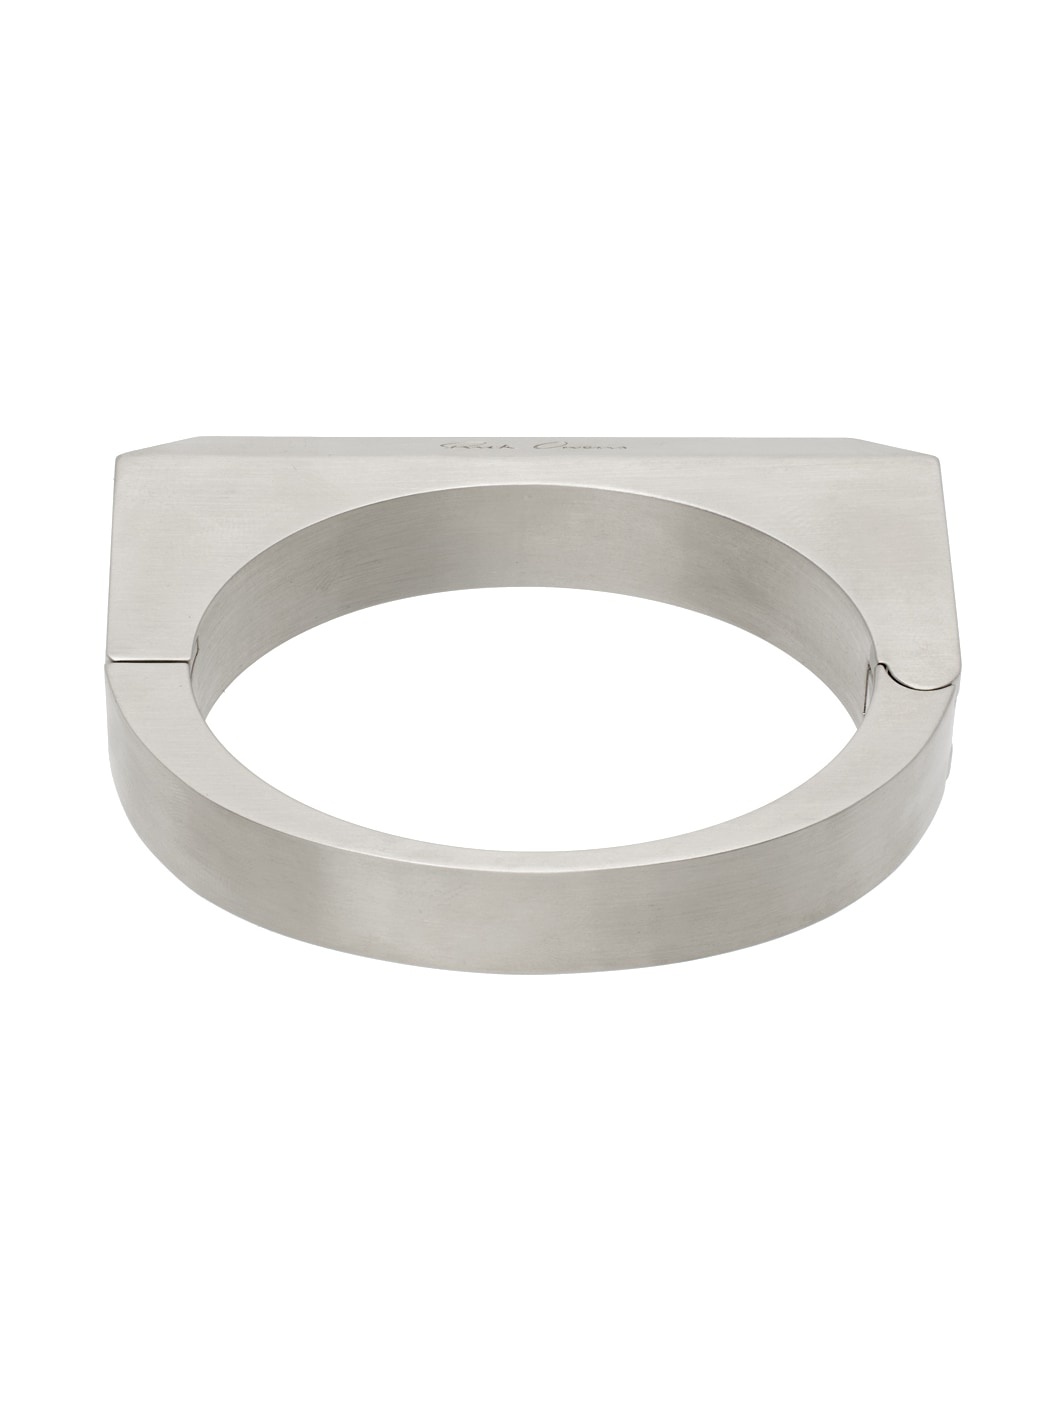 Silver Beveled Bangle Bracelet - 2